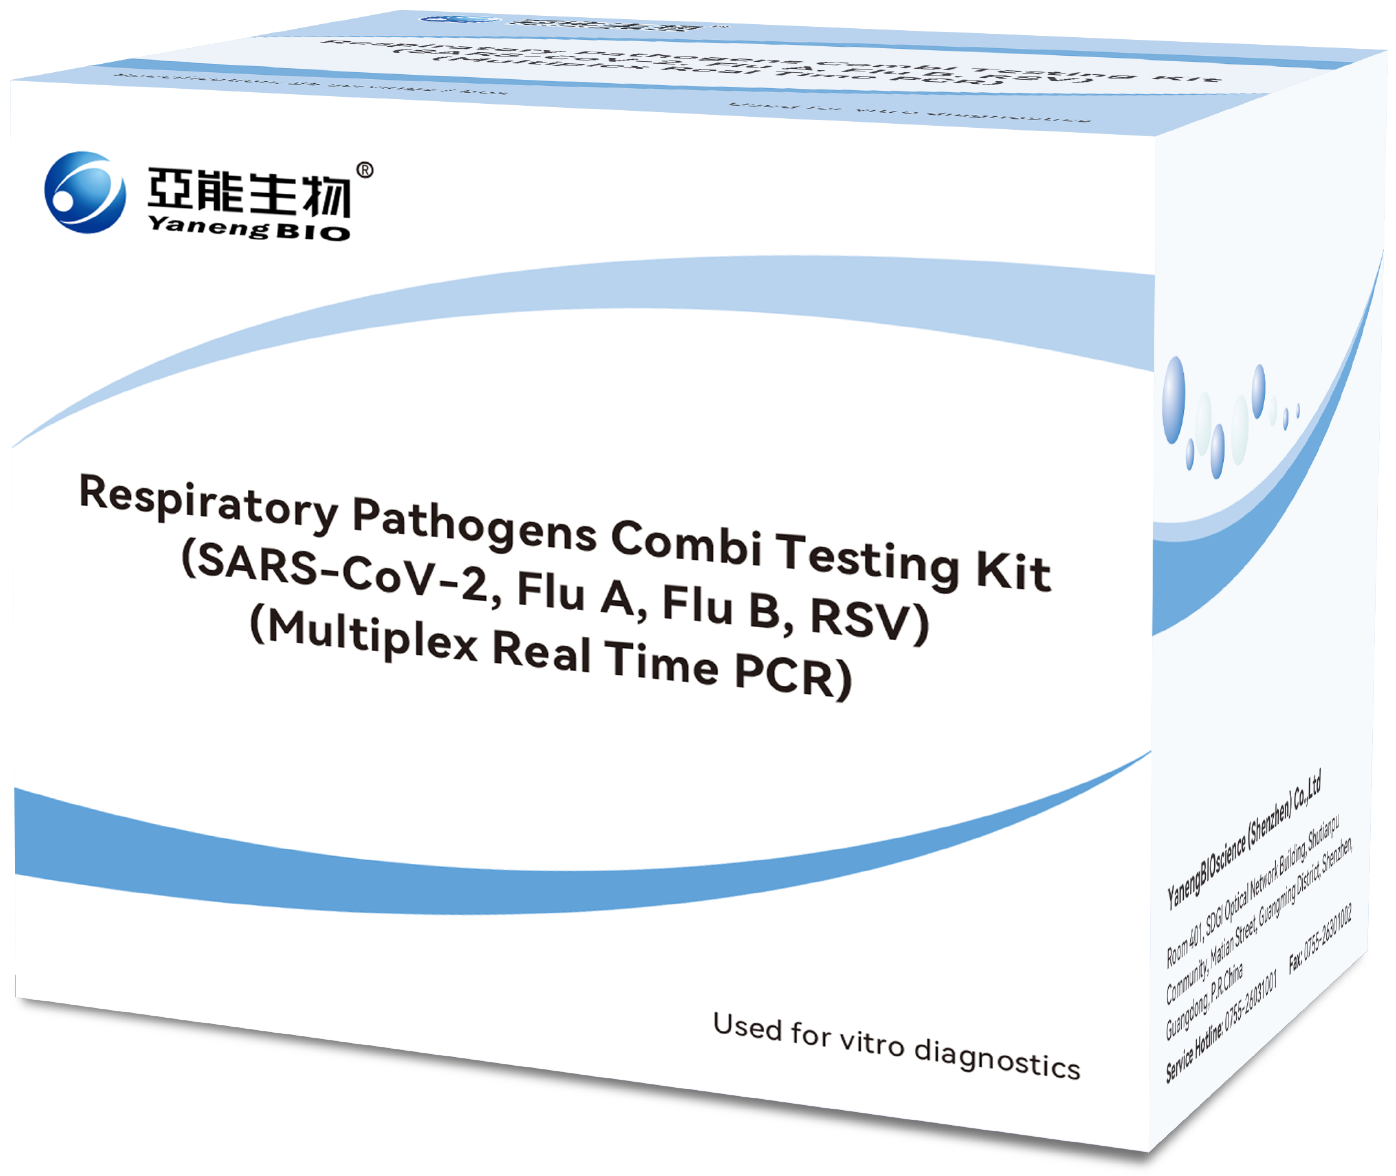 Respiratory Pathogens Combi Testing Kit -- RPC